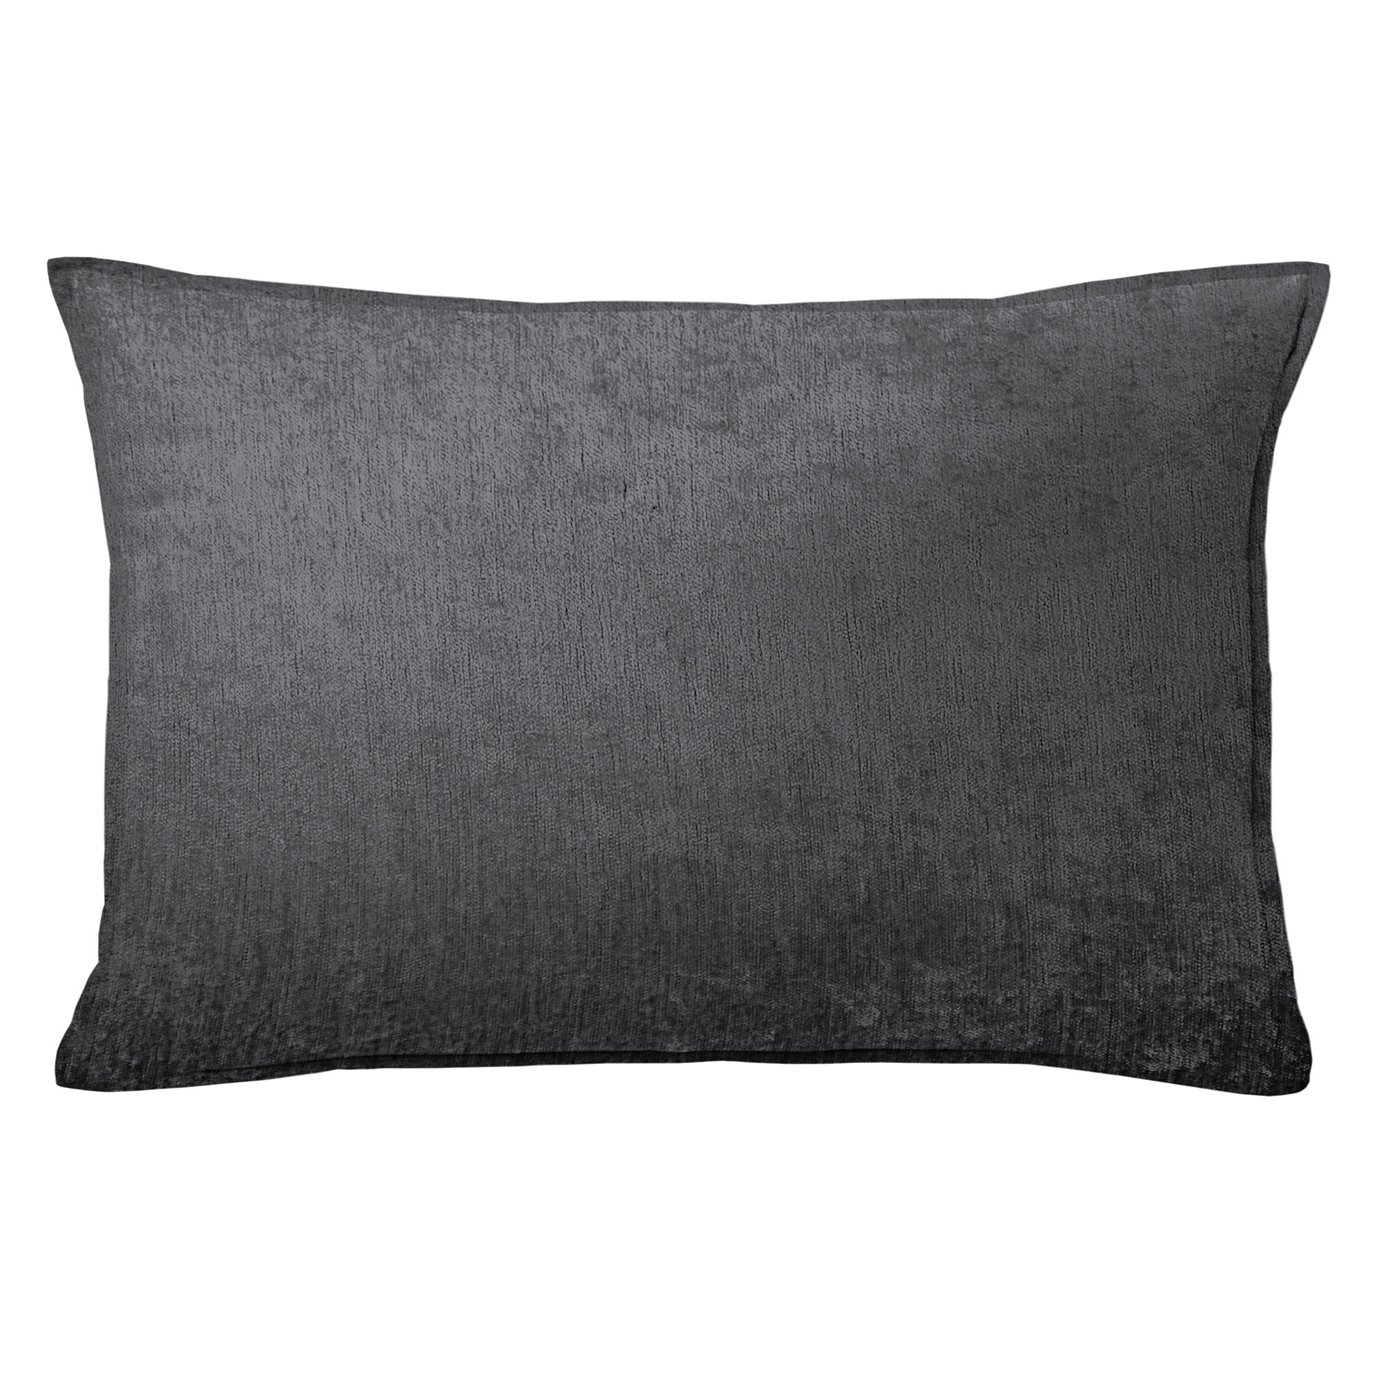 Juno Velvet Gray Decorative Pillow - Size 14"x20" Rectangle